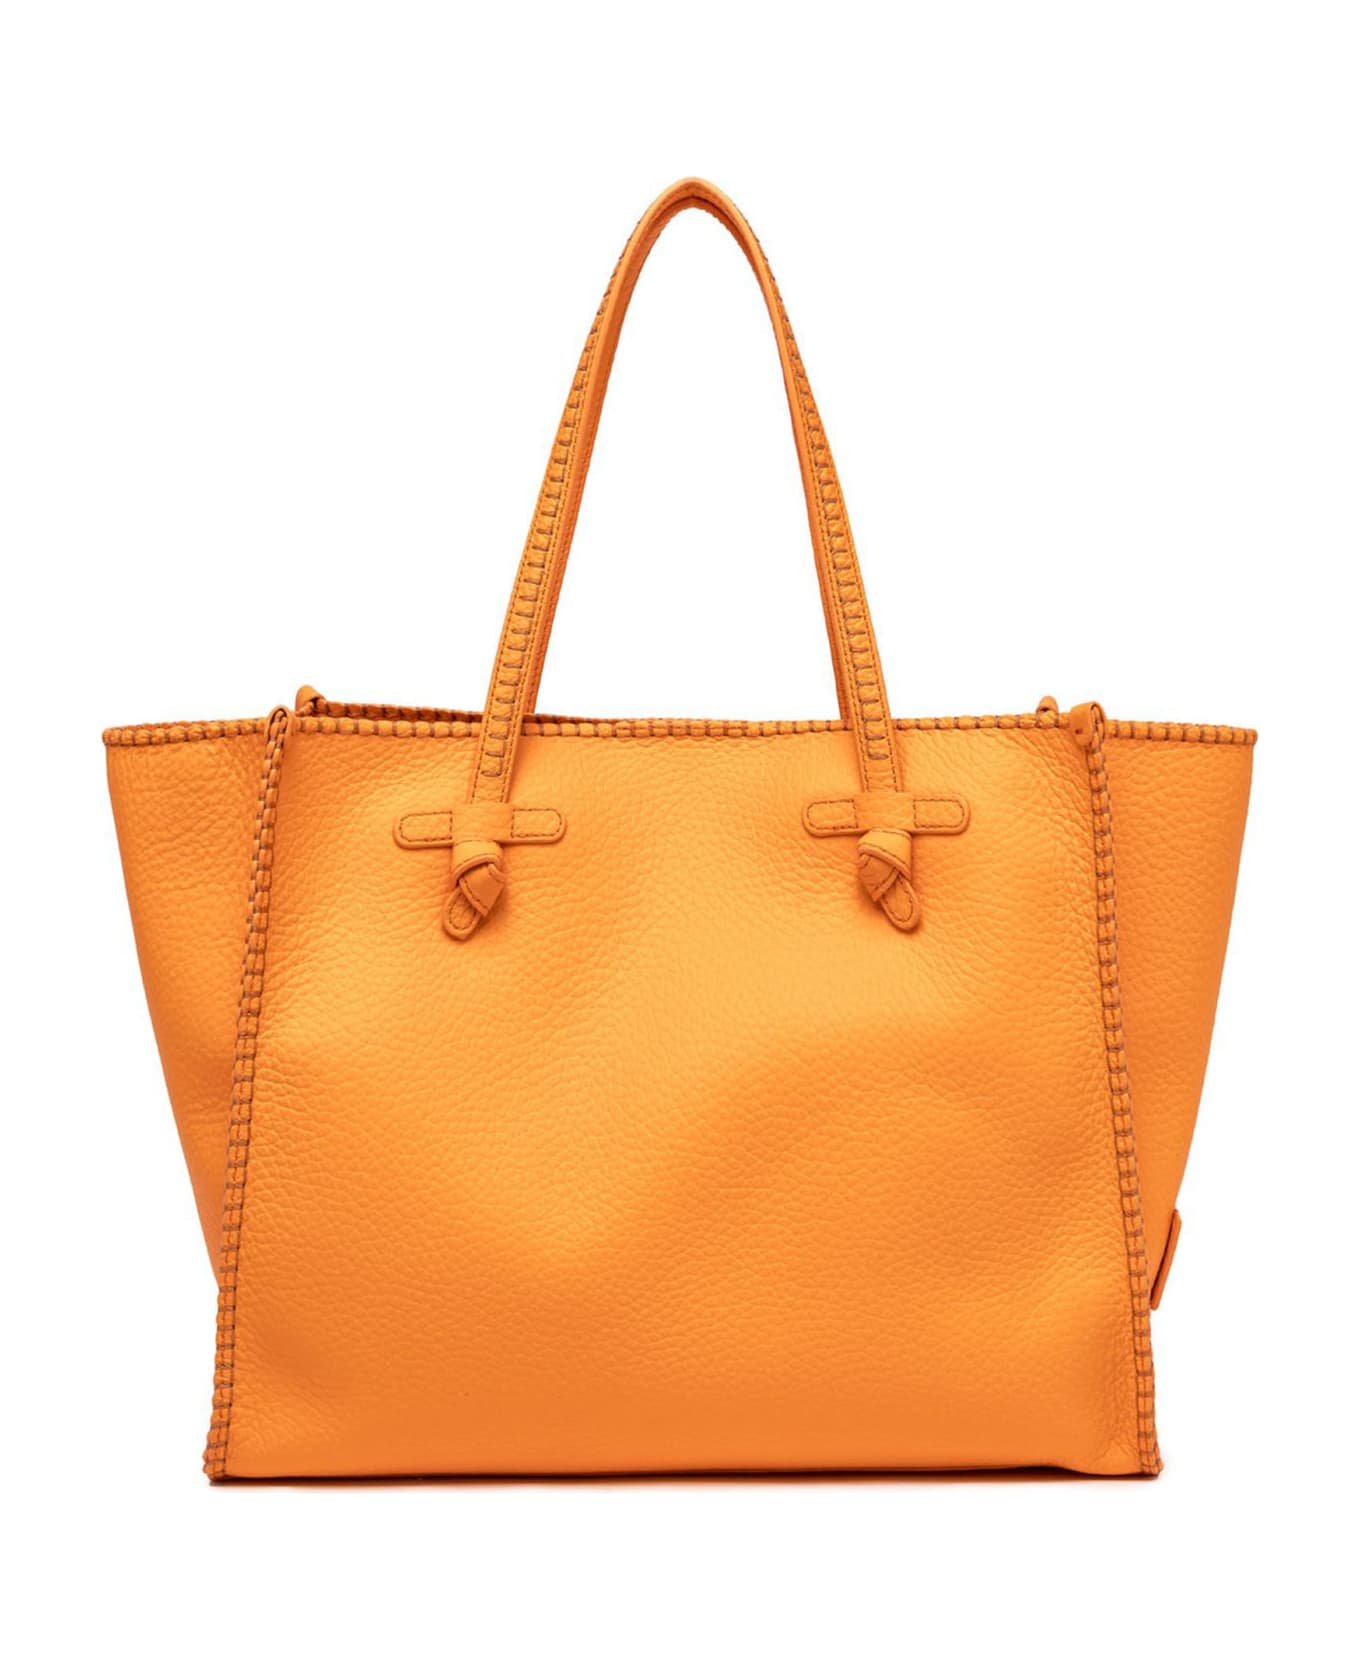 Gianni Chiarini Orange Soft Leather Shopping Bag - Flame orange